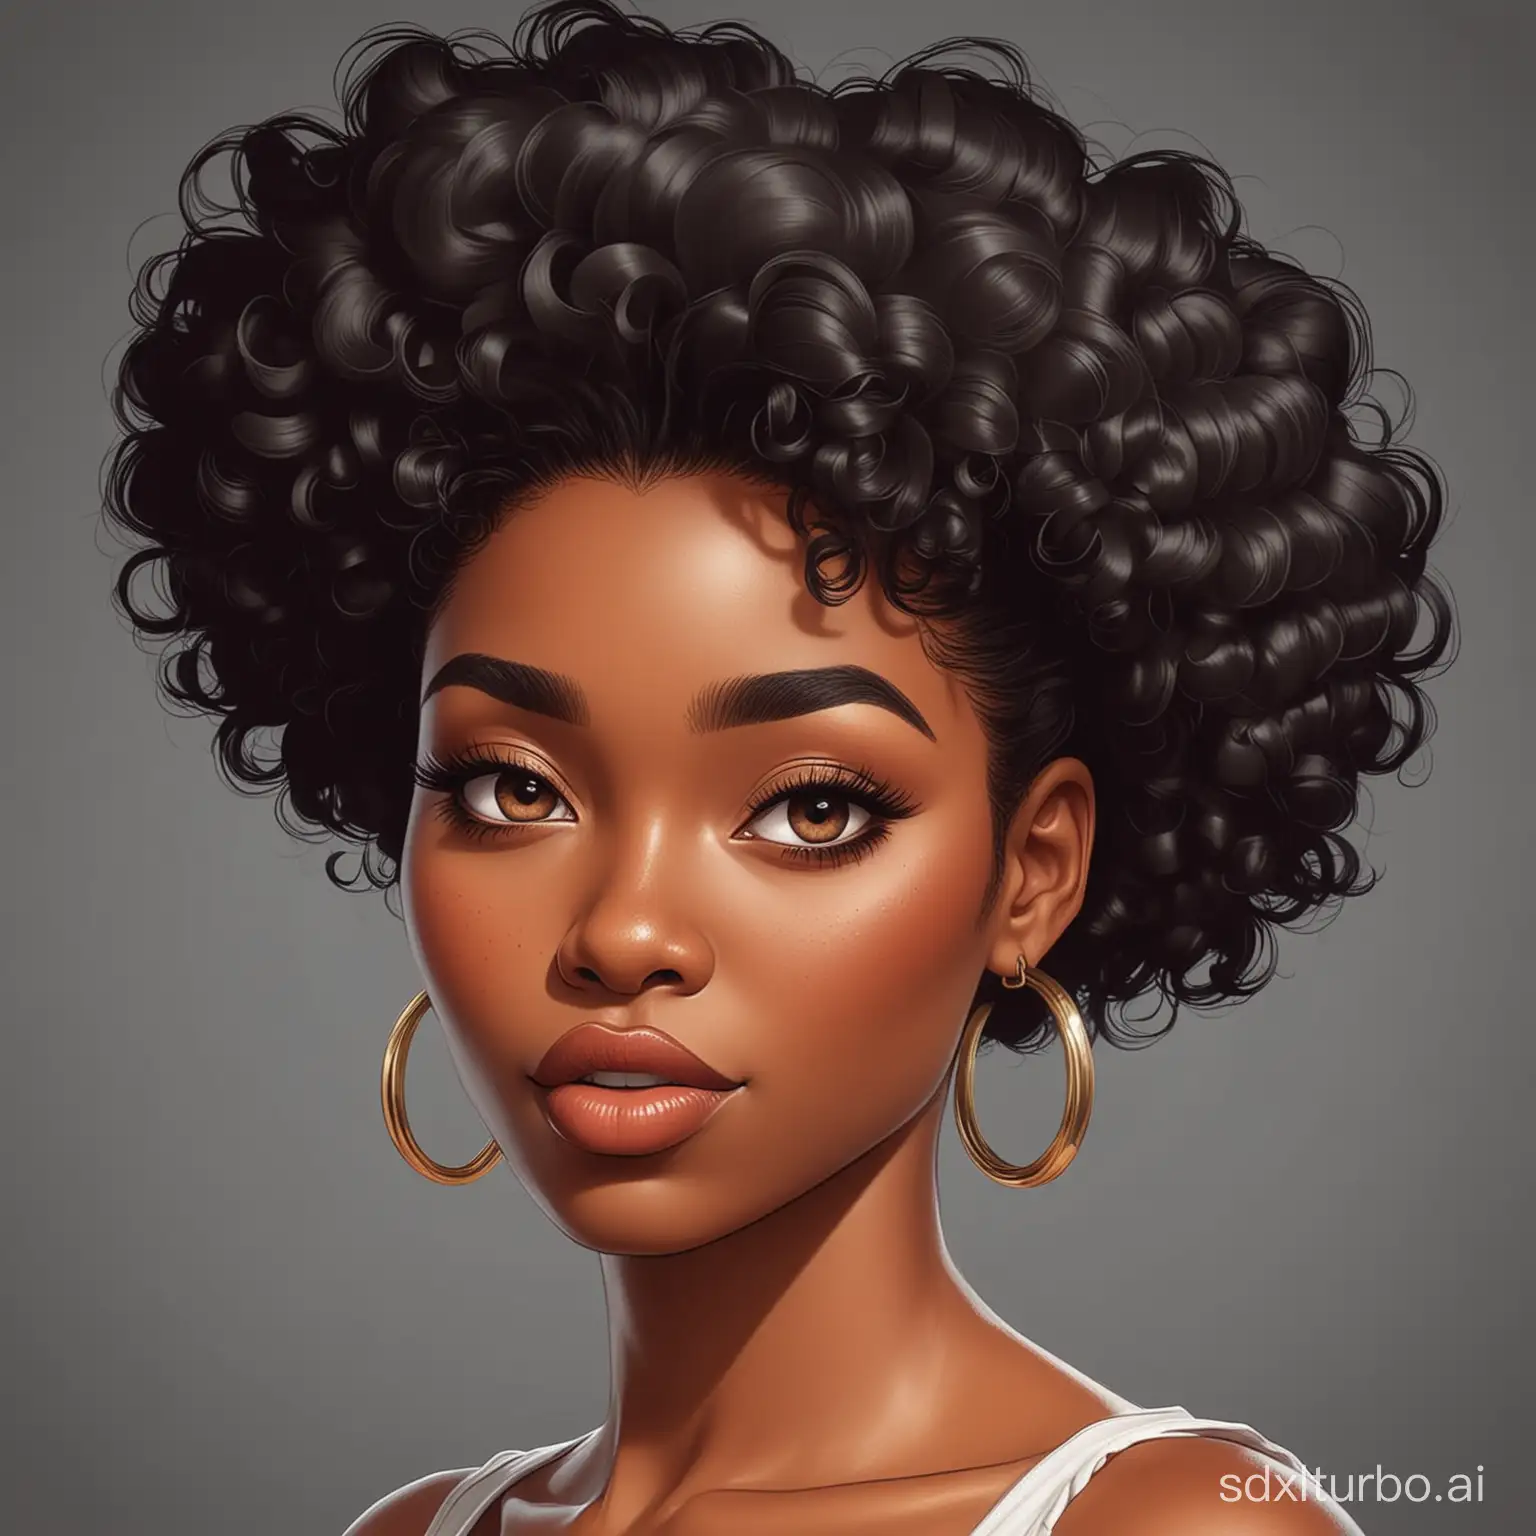 Cartoon-Illustration-of-a-Plush-Black-Woman-with-Artistic-Charm